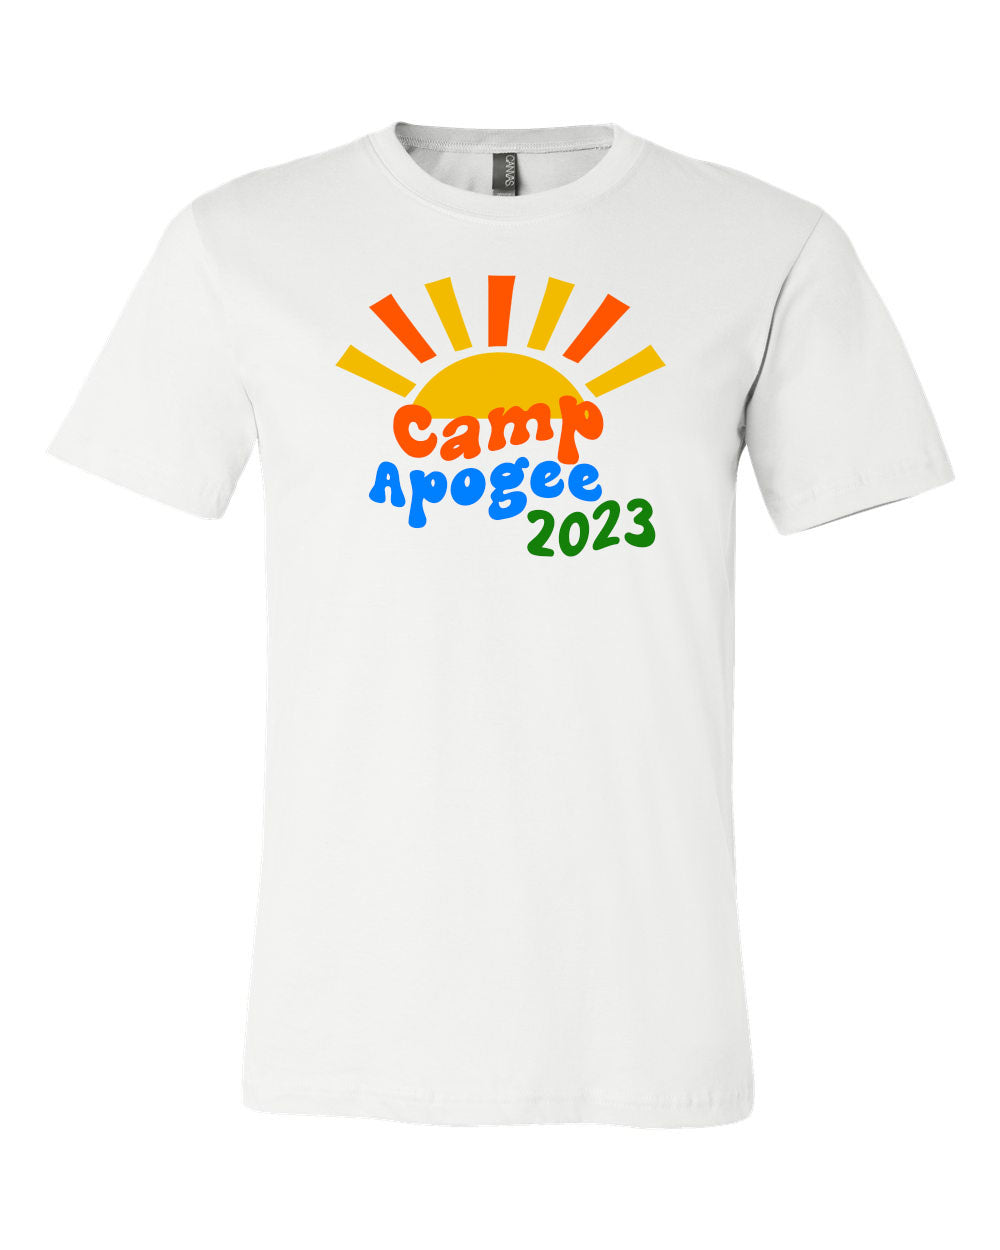 Apogee Camp Design 2 T-Shirt